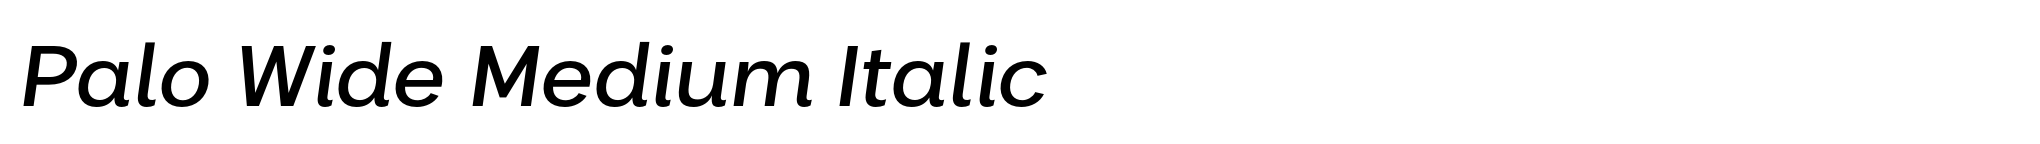 Palo Wide Medium Italic image